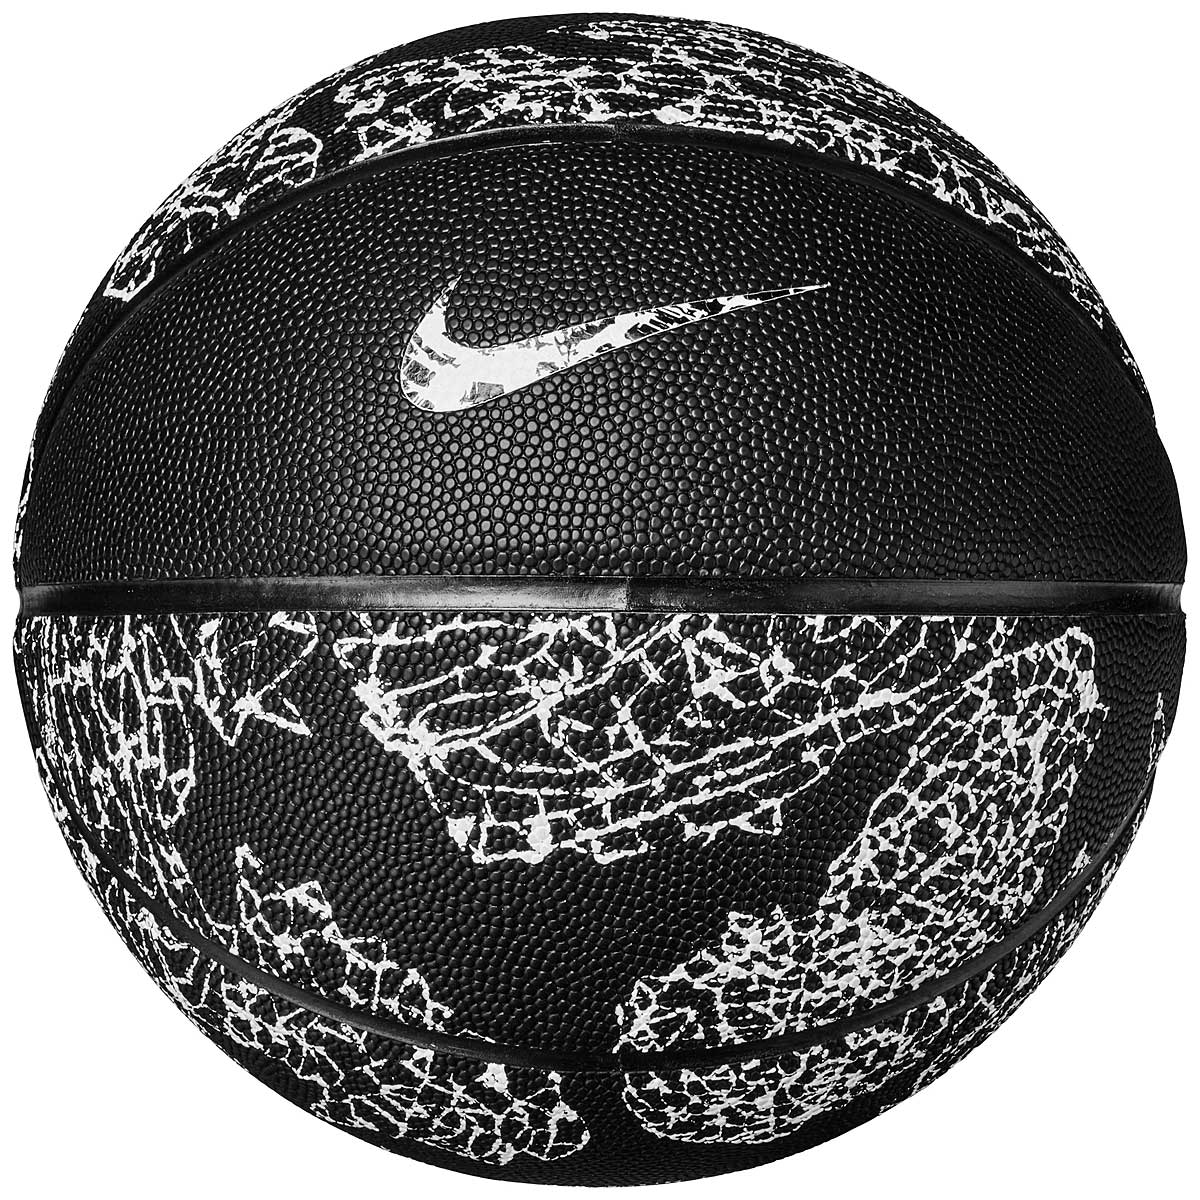 Image of Nike Basketball 8p Prm Energy Basketball, Black/black/black/white